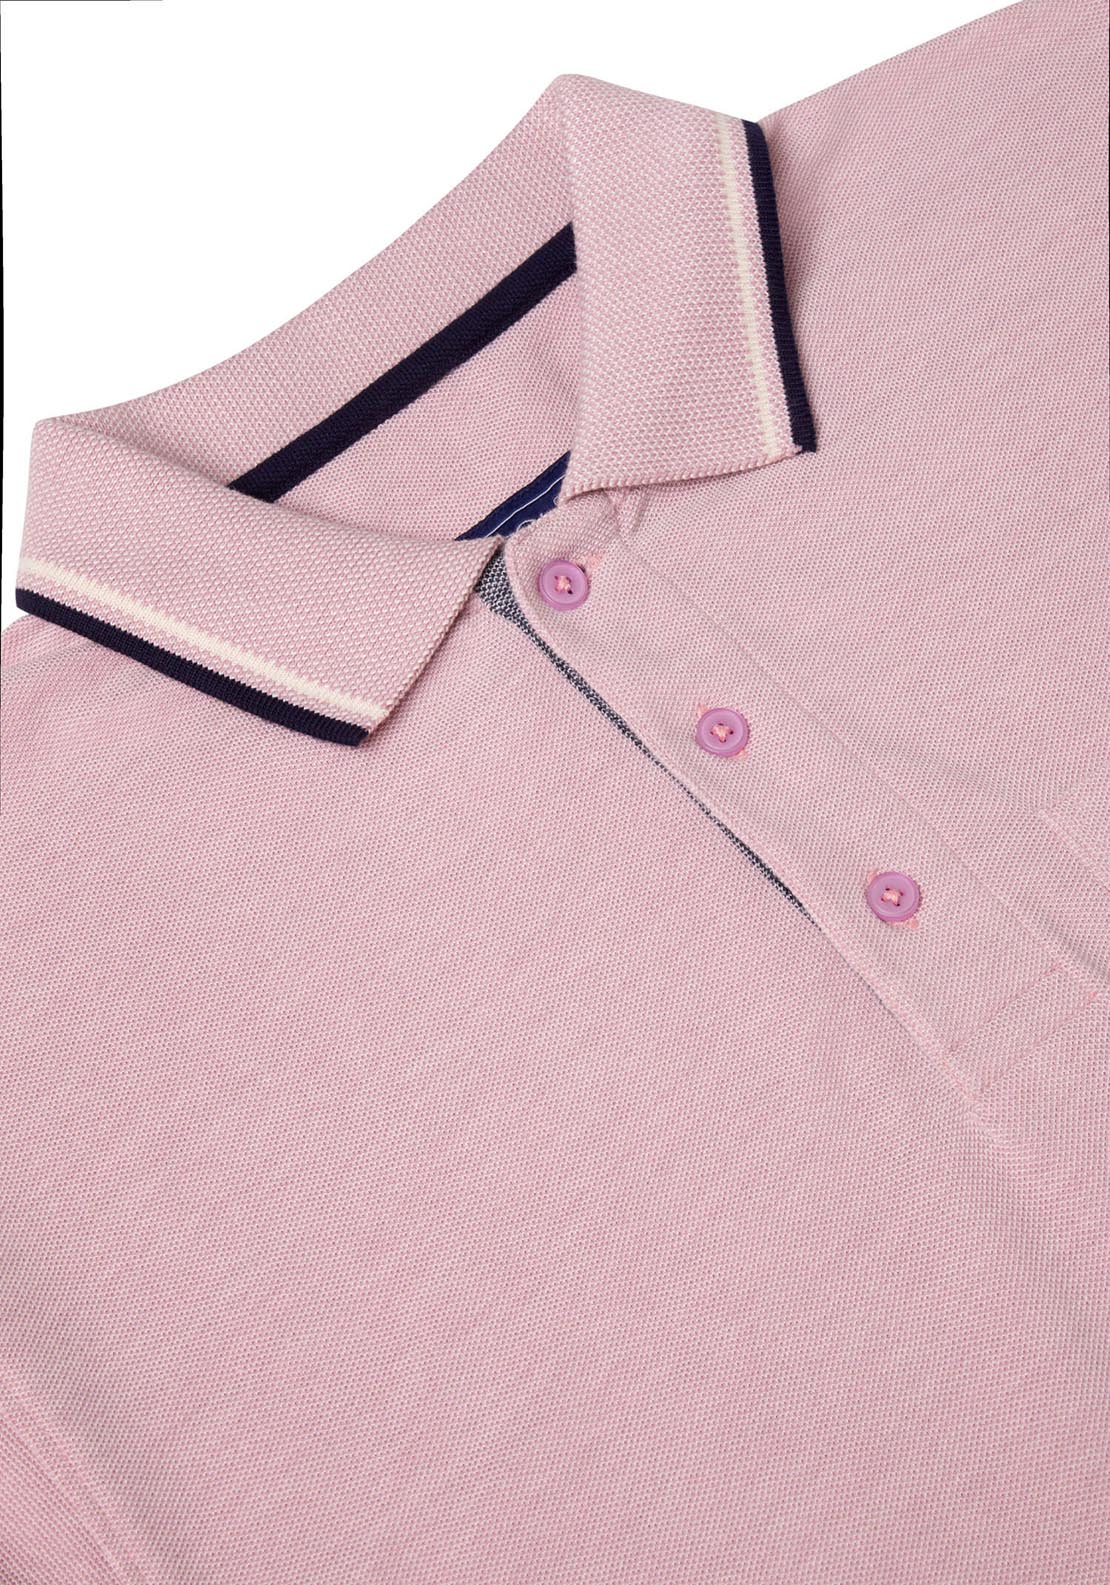 Drifter Short Sleeve Plain Polo - Pink 2 Shaws Department Stores